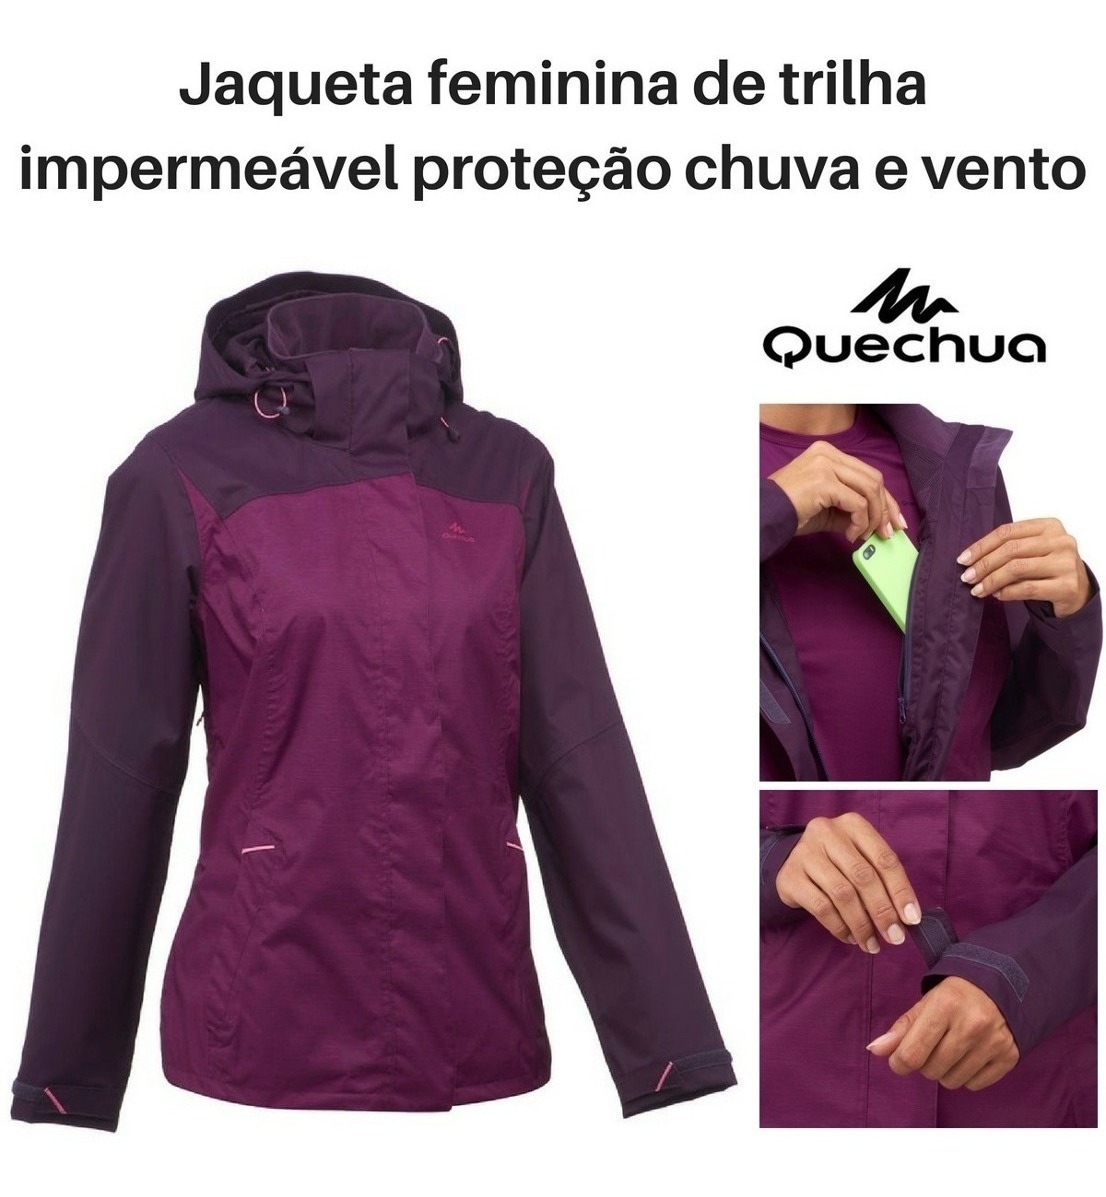 jaqueta trilha feminina